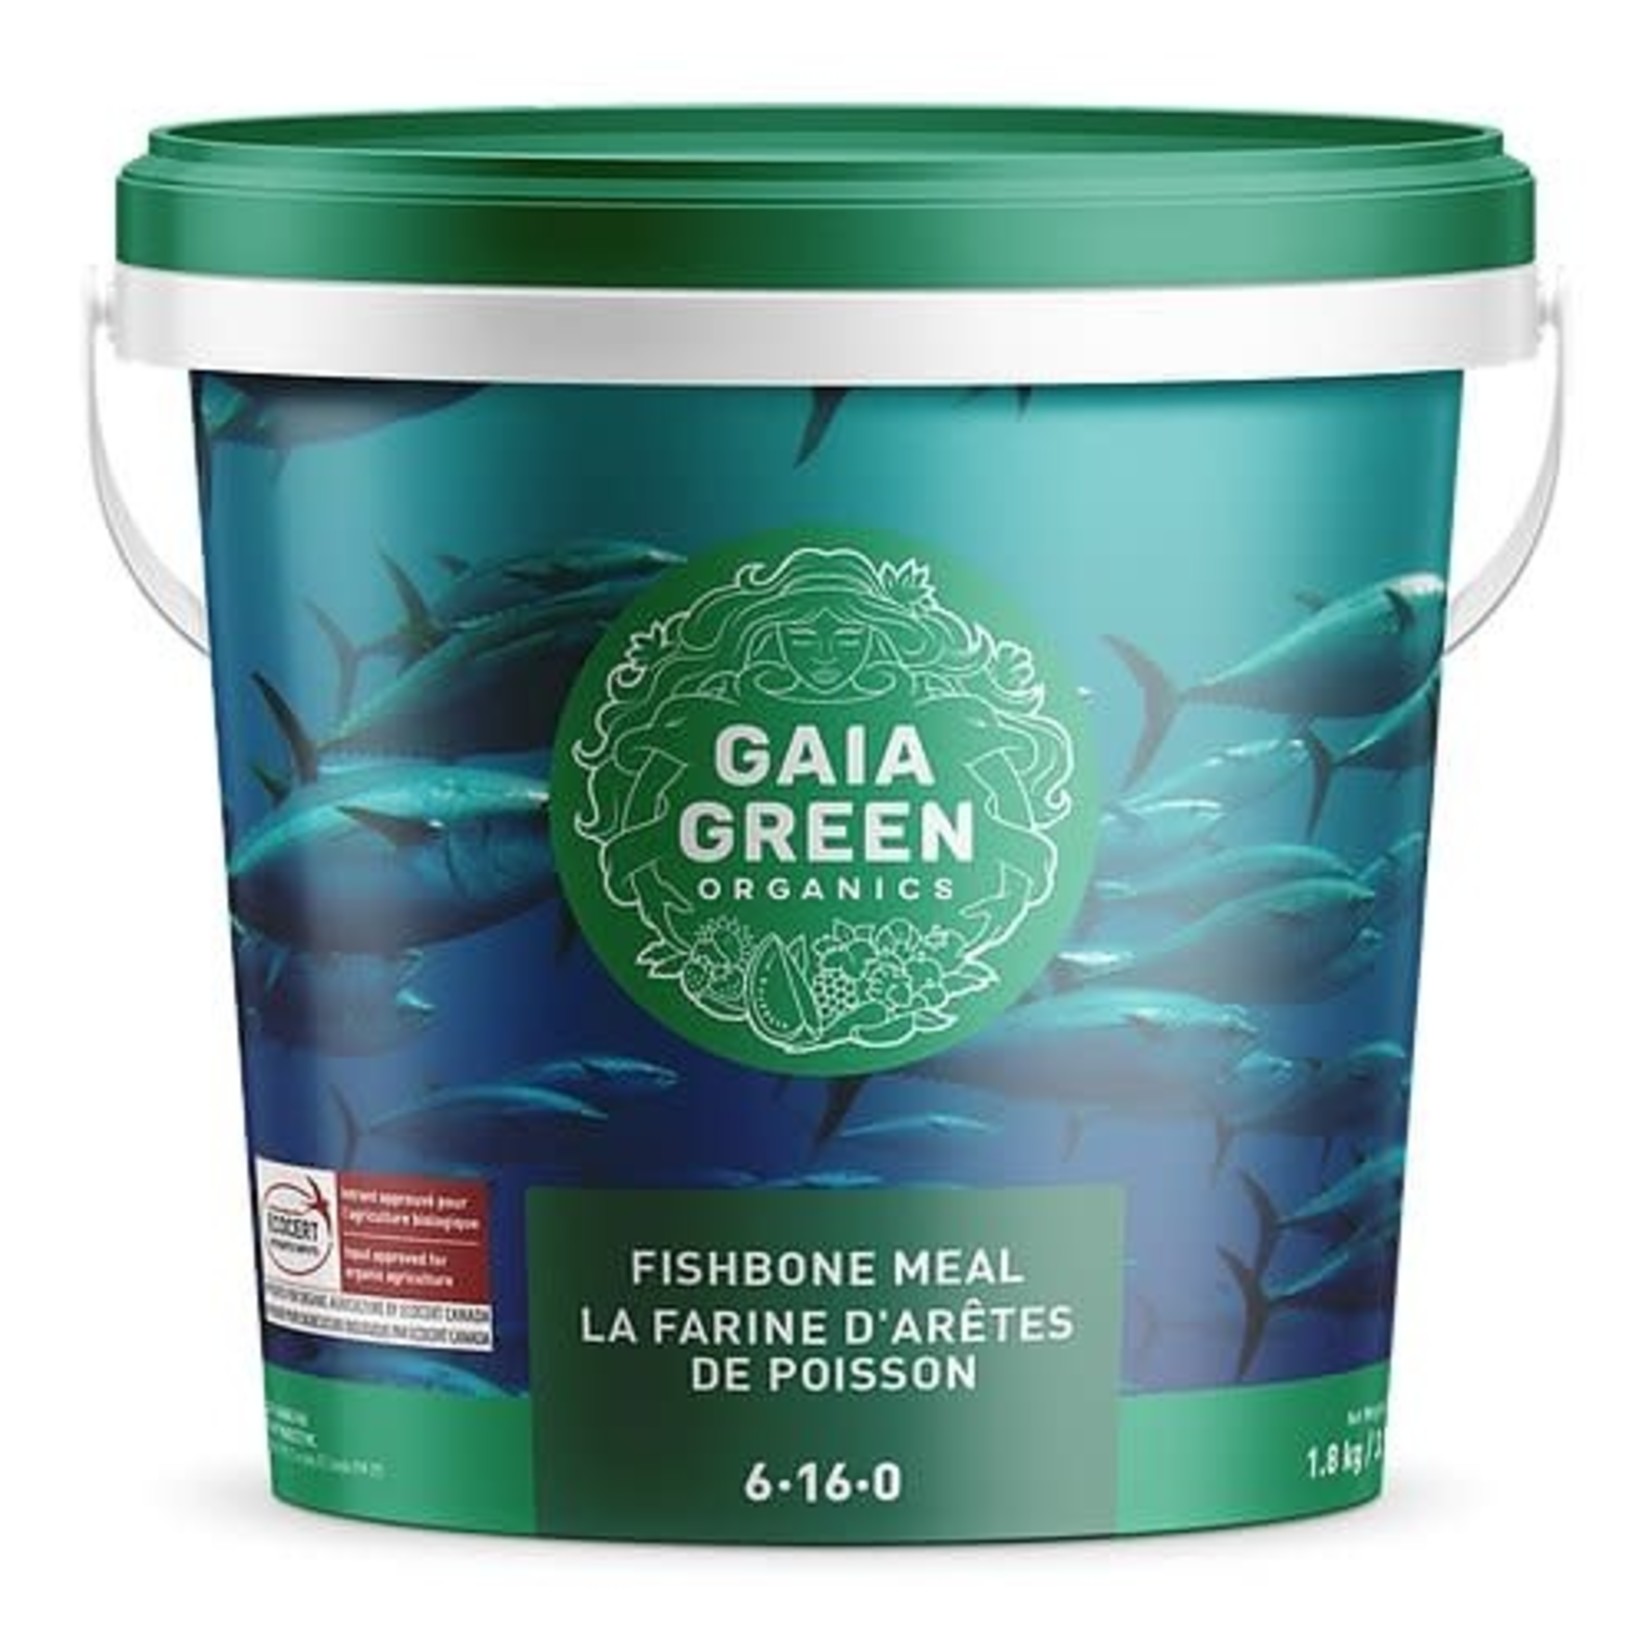 Gaia Green Gaia Green Fishbone Meal 1.8kg